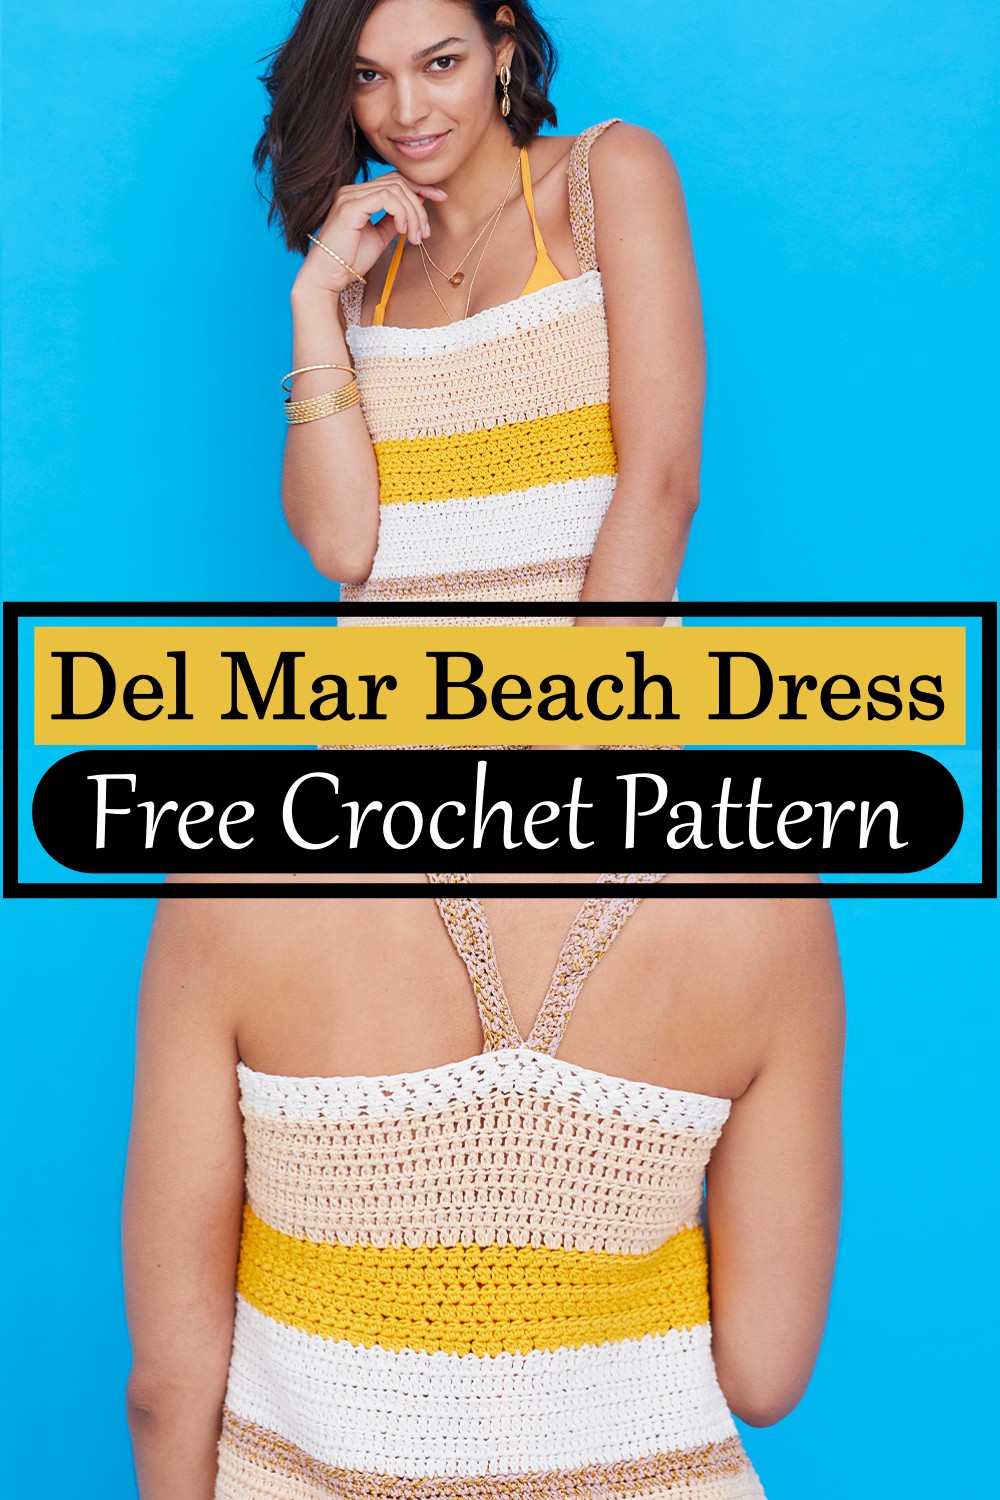 Del Mar Beach Dress